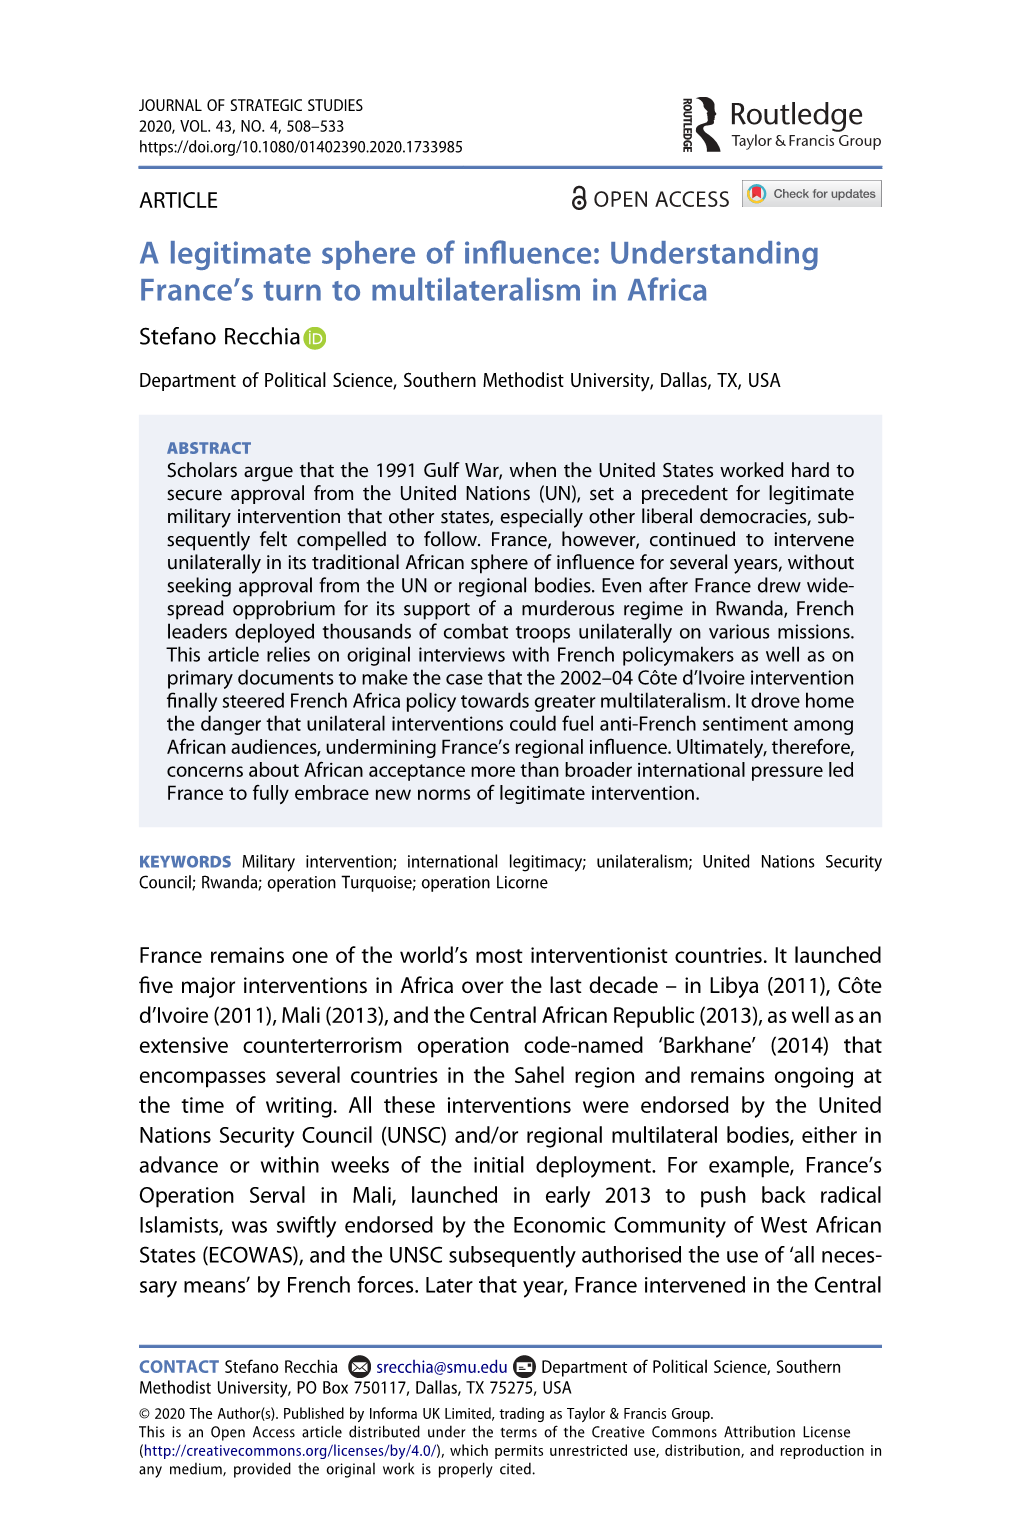 Understanding France's Turn to Multilateralism in Africa